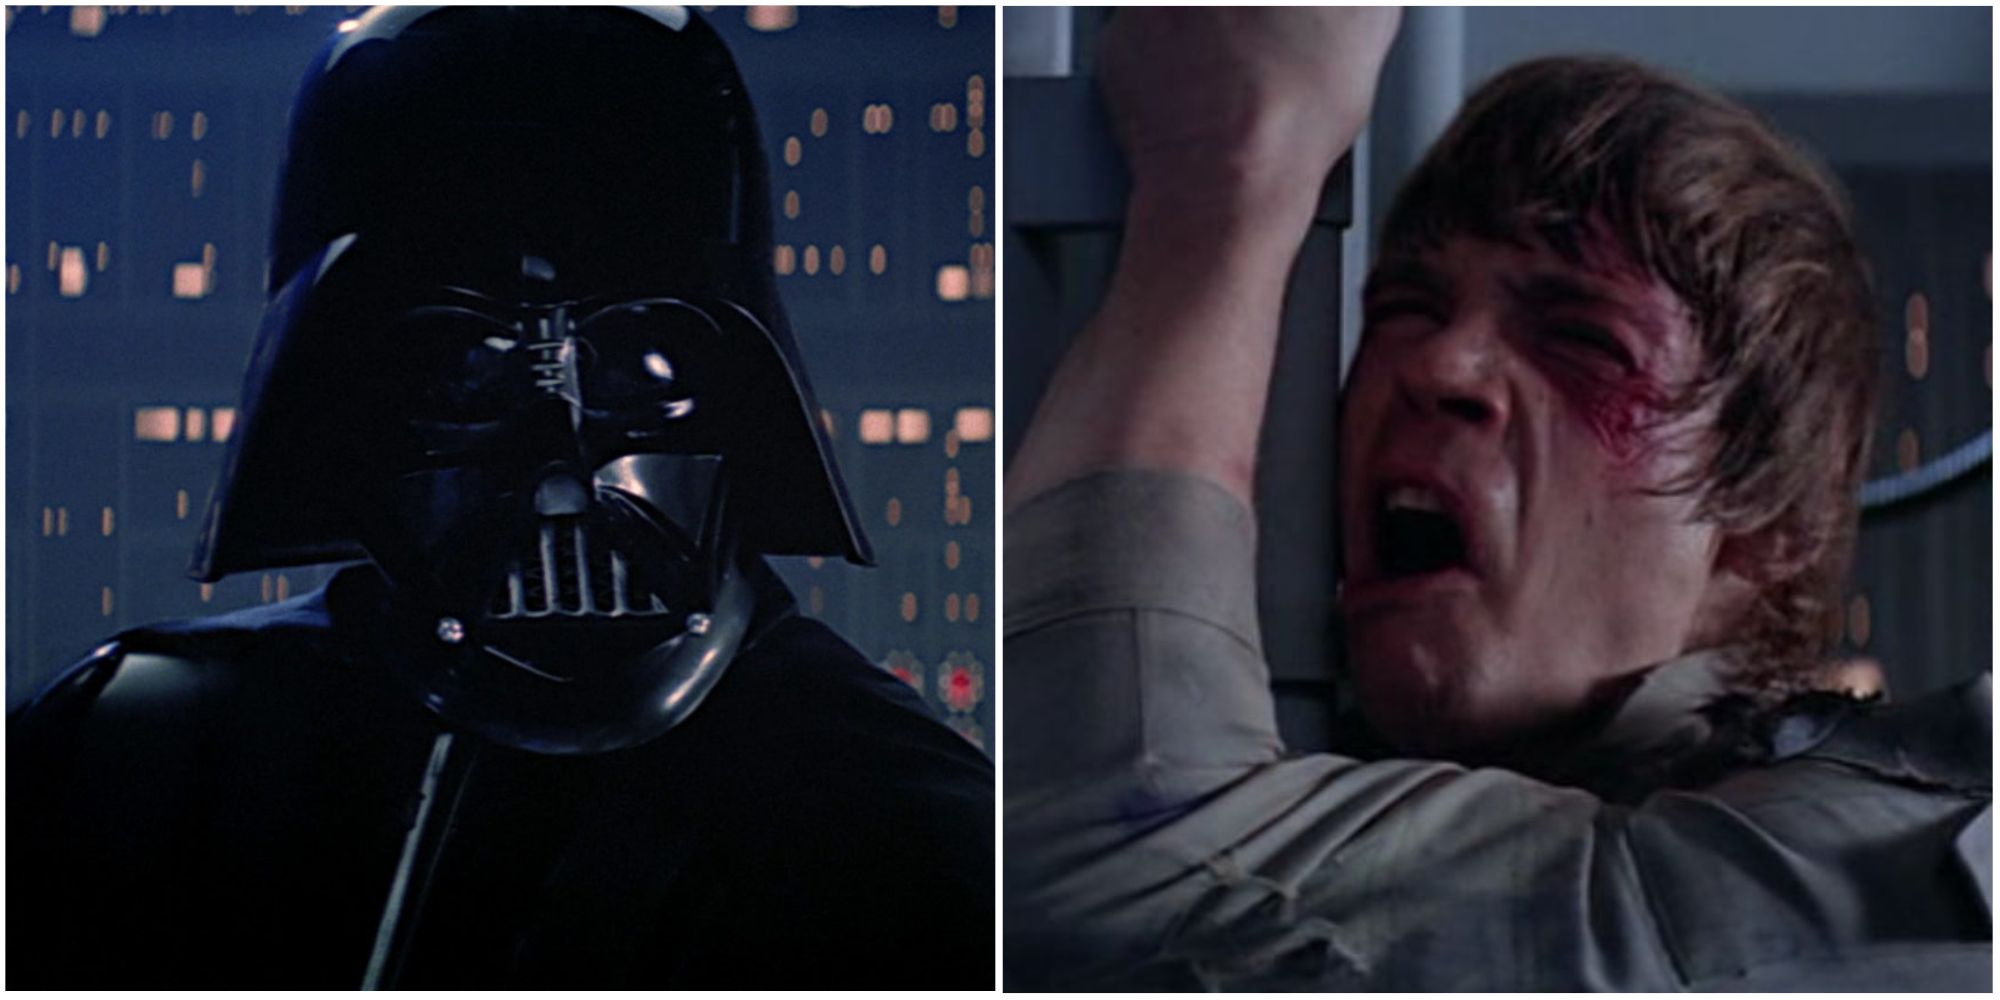 Darth Vader and Luke Skywalker in Star Wars: The Empire Strikes Back